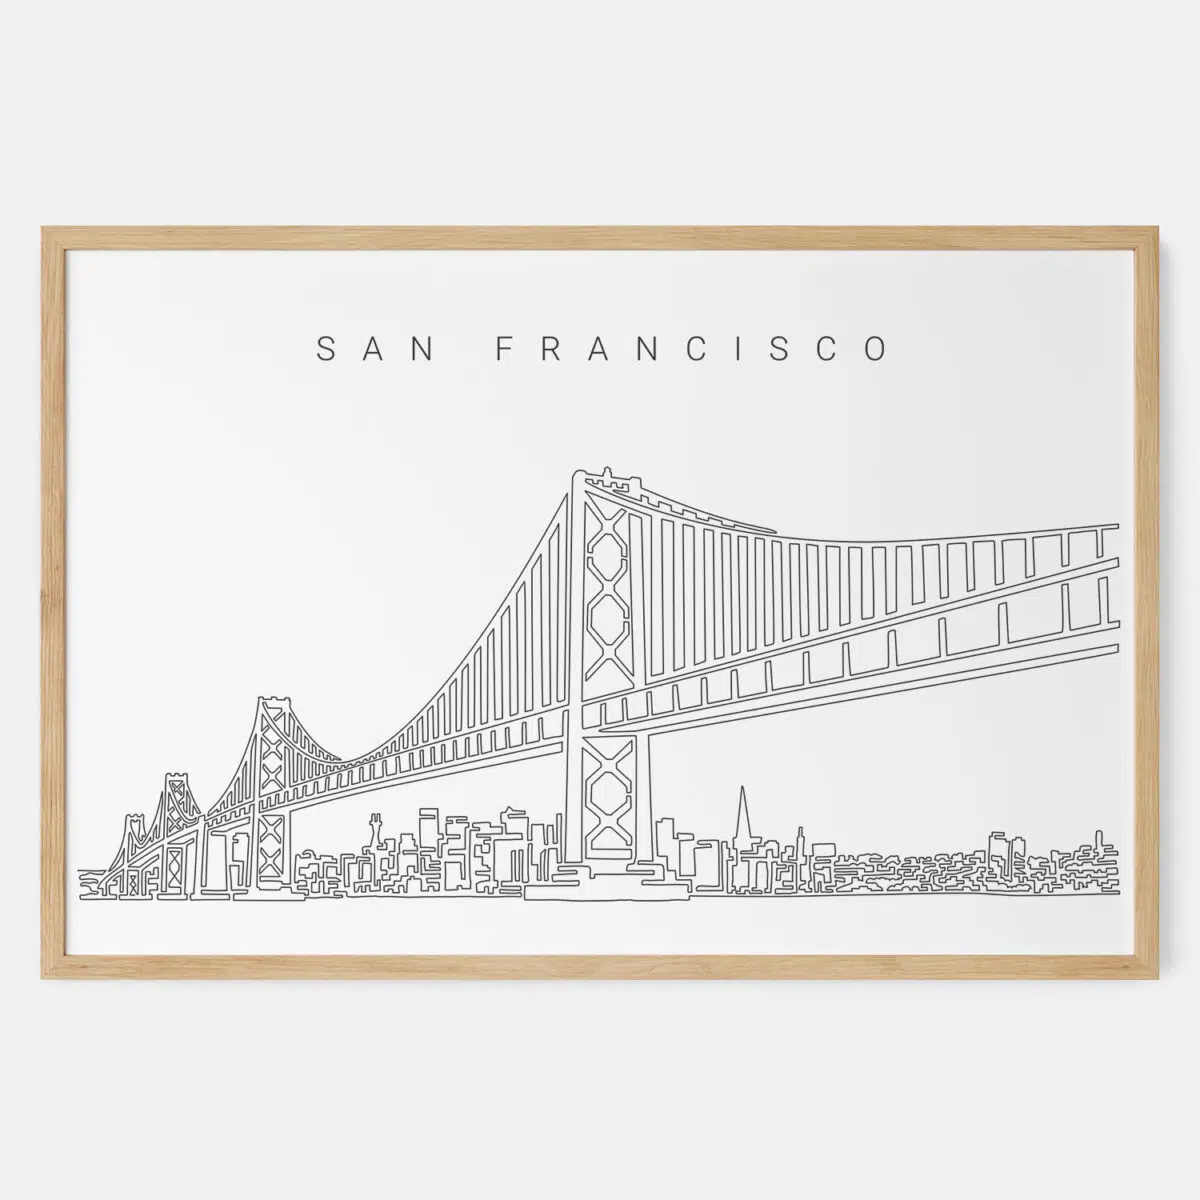 Framed San Francisco Oakland Bay Bridge Art print - Landscape - Main